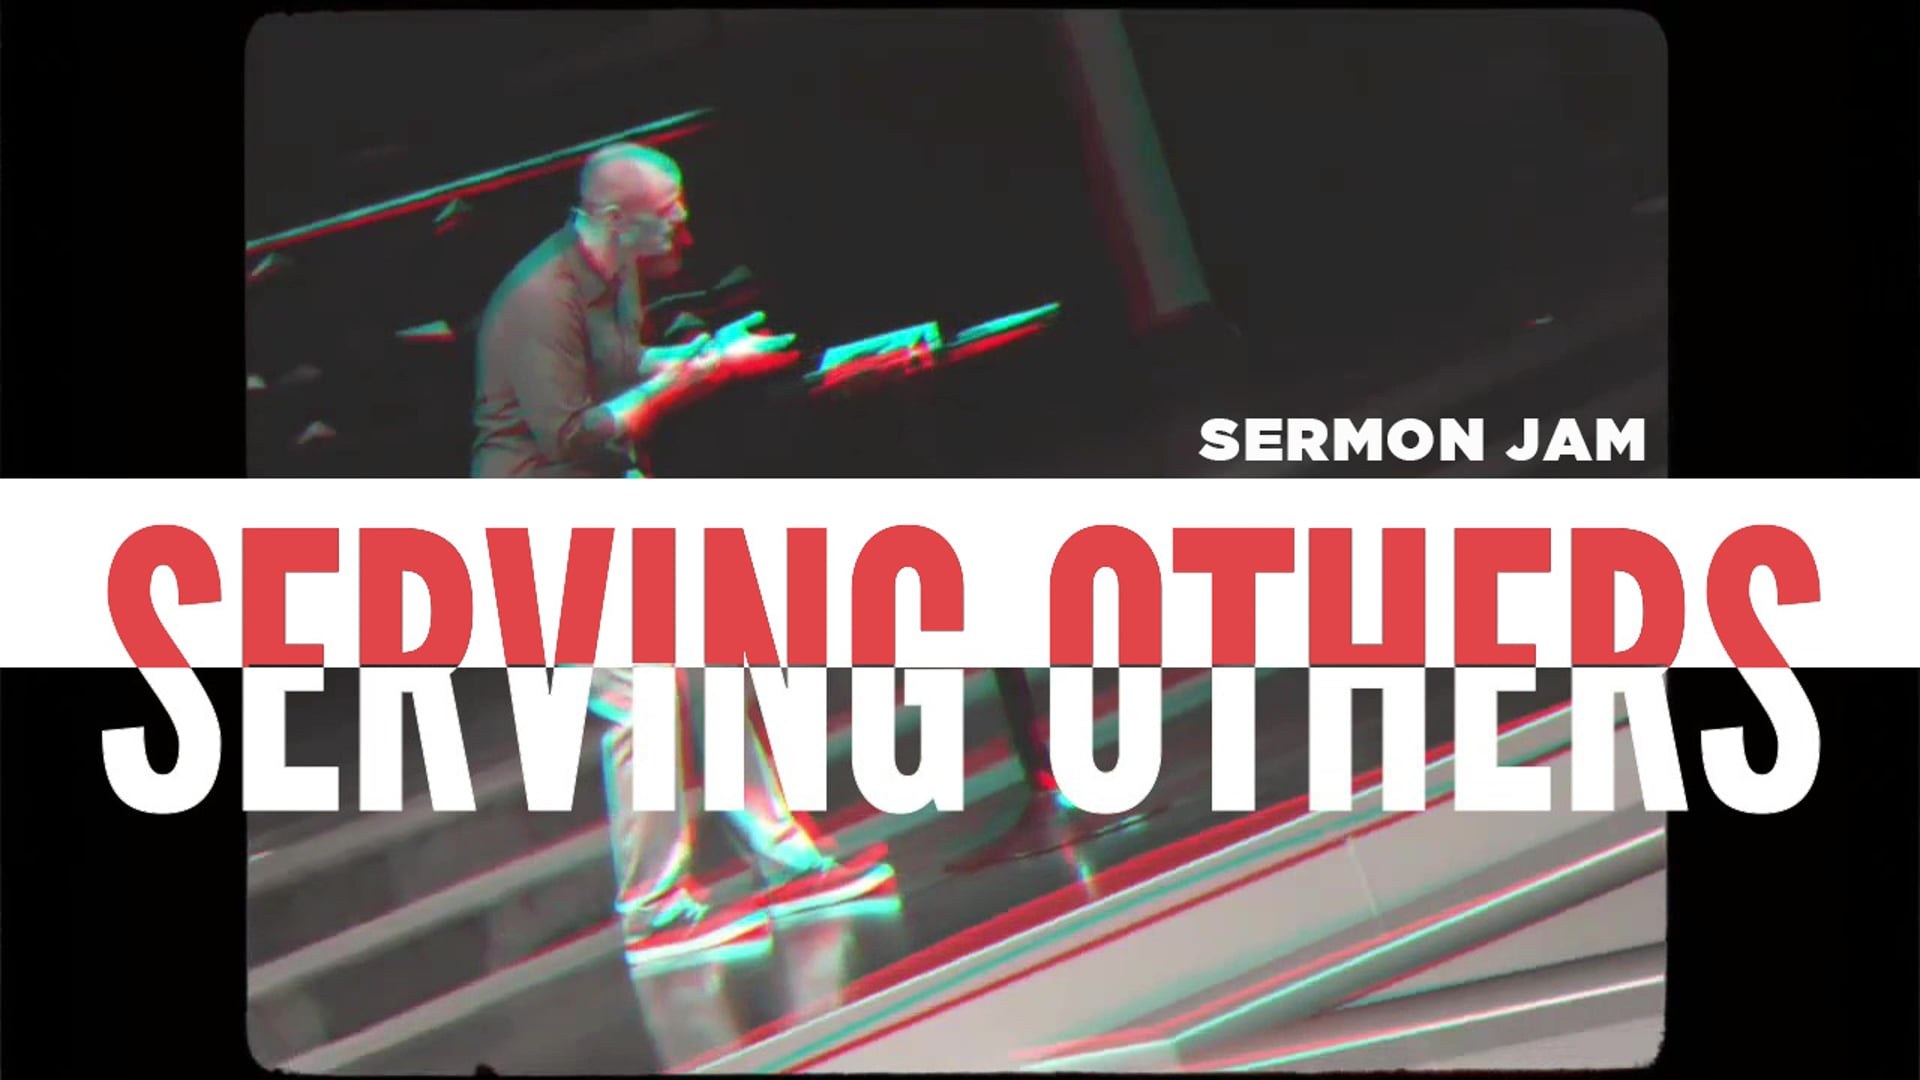 Serving Others - Sermon Jam